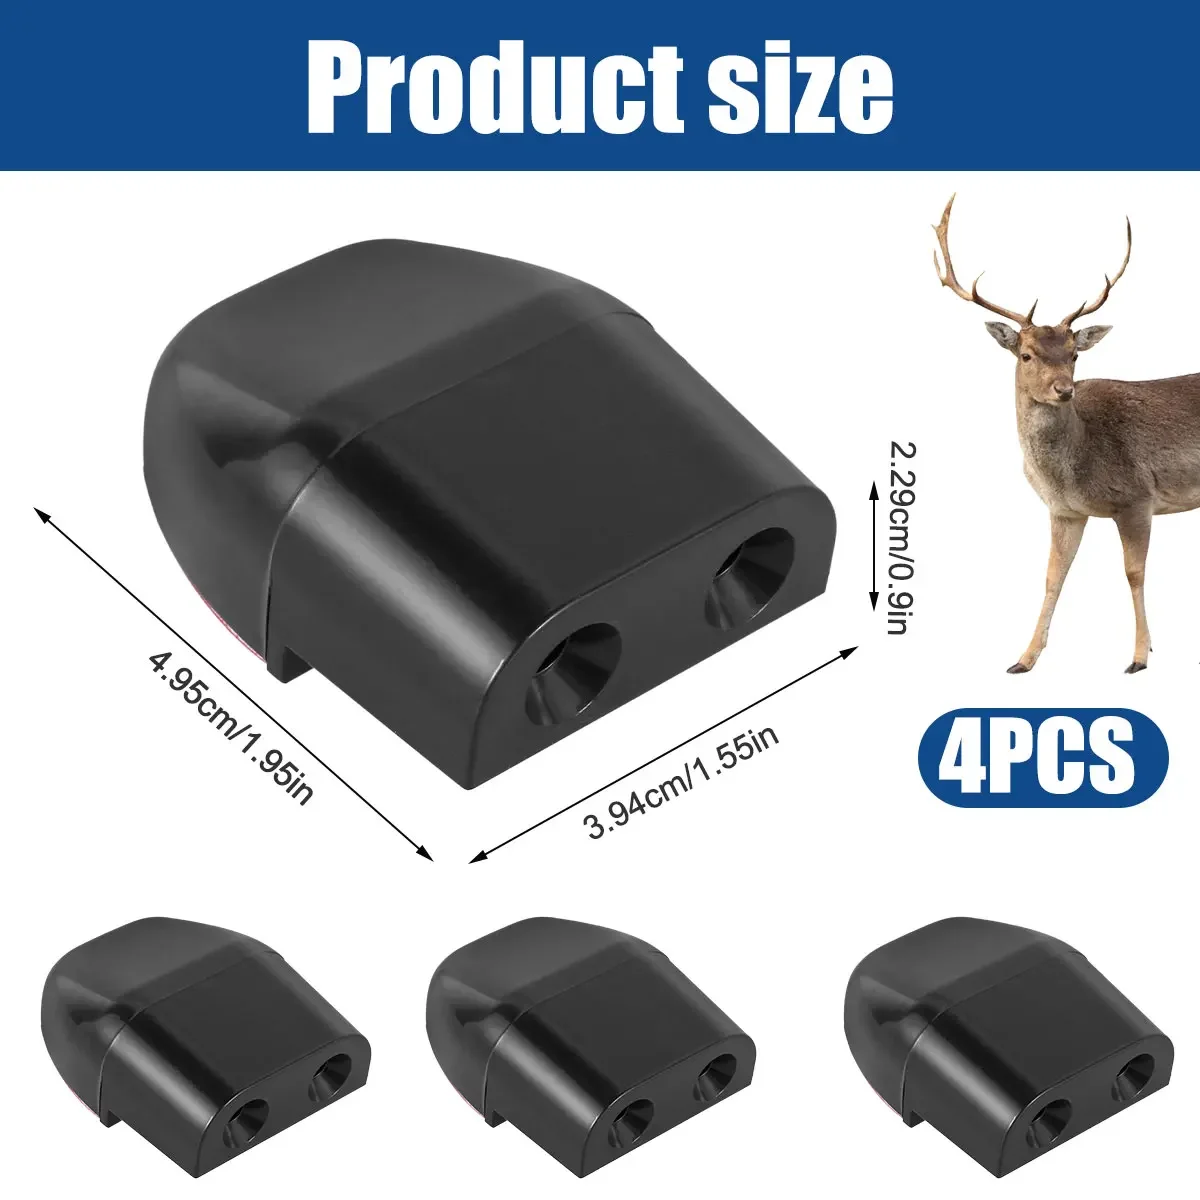 4Pcs Deer Warning Whistles Device Portable Deer Repelling Whistles